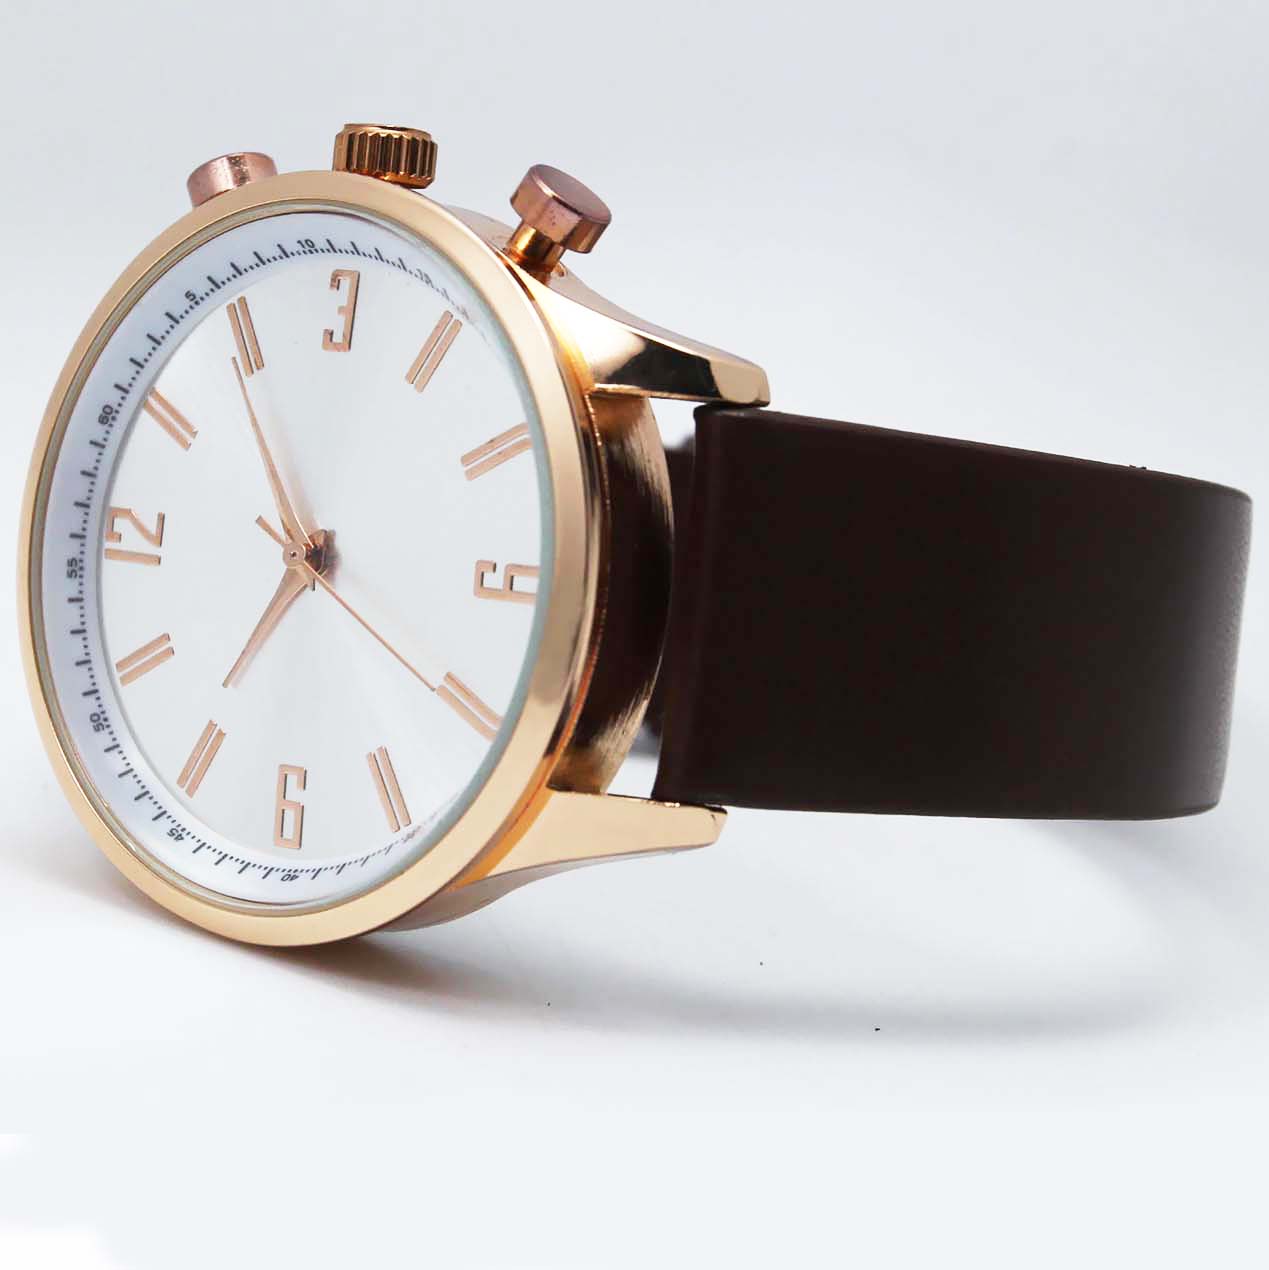 #02125Men's wristwatch quartz analog leather strap watch